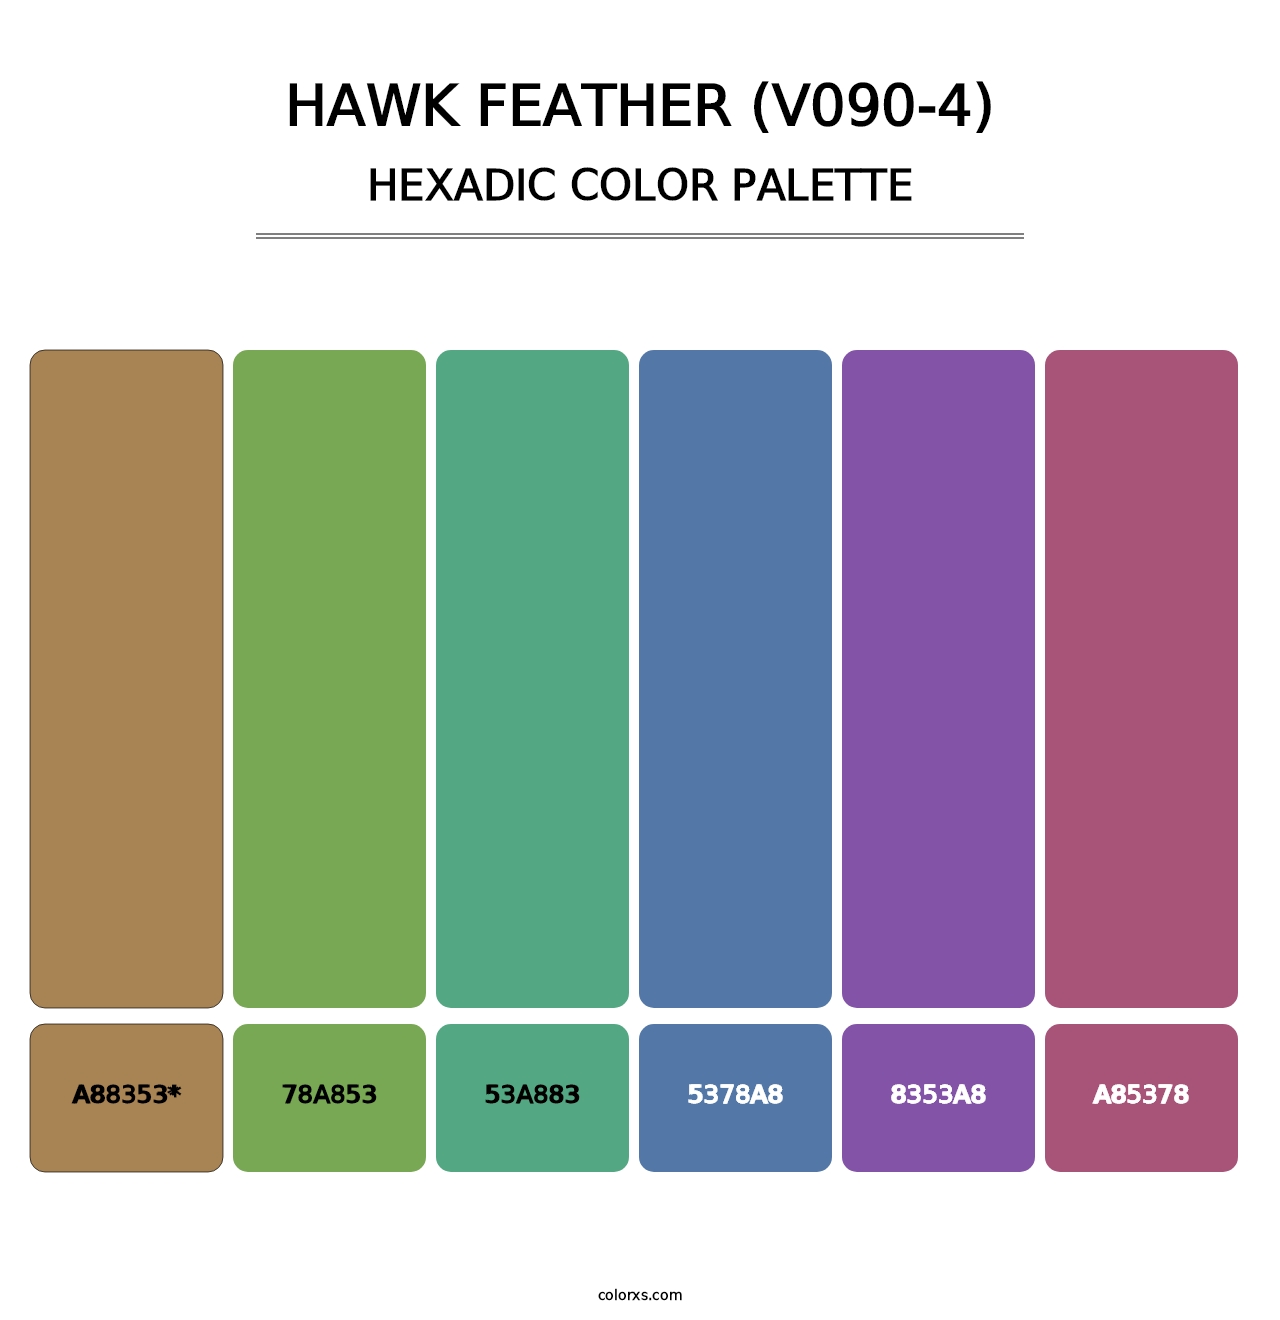 Hawk Feather (V090-4) - Hexadic Color Palette